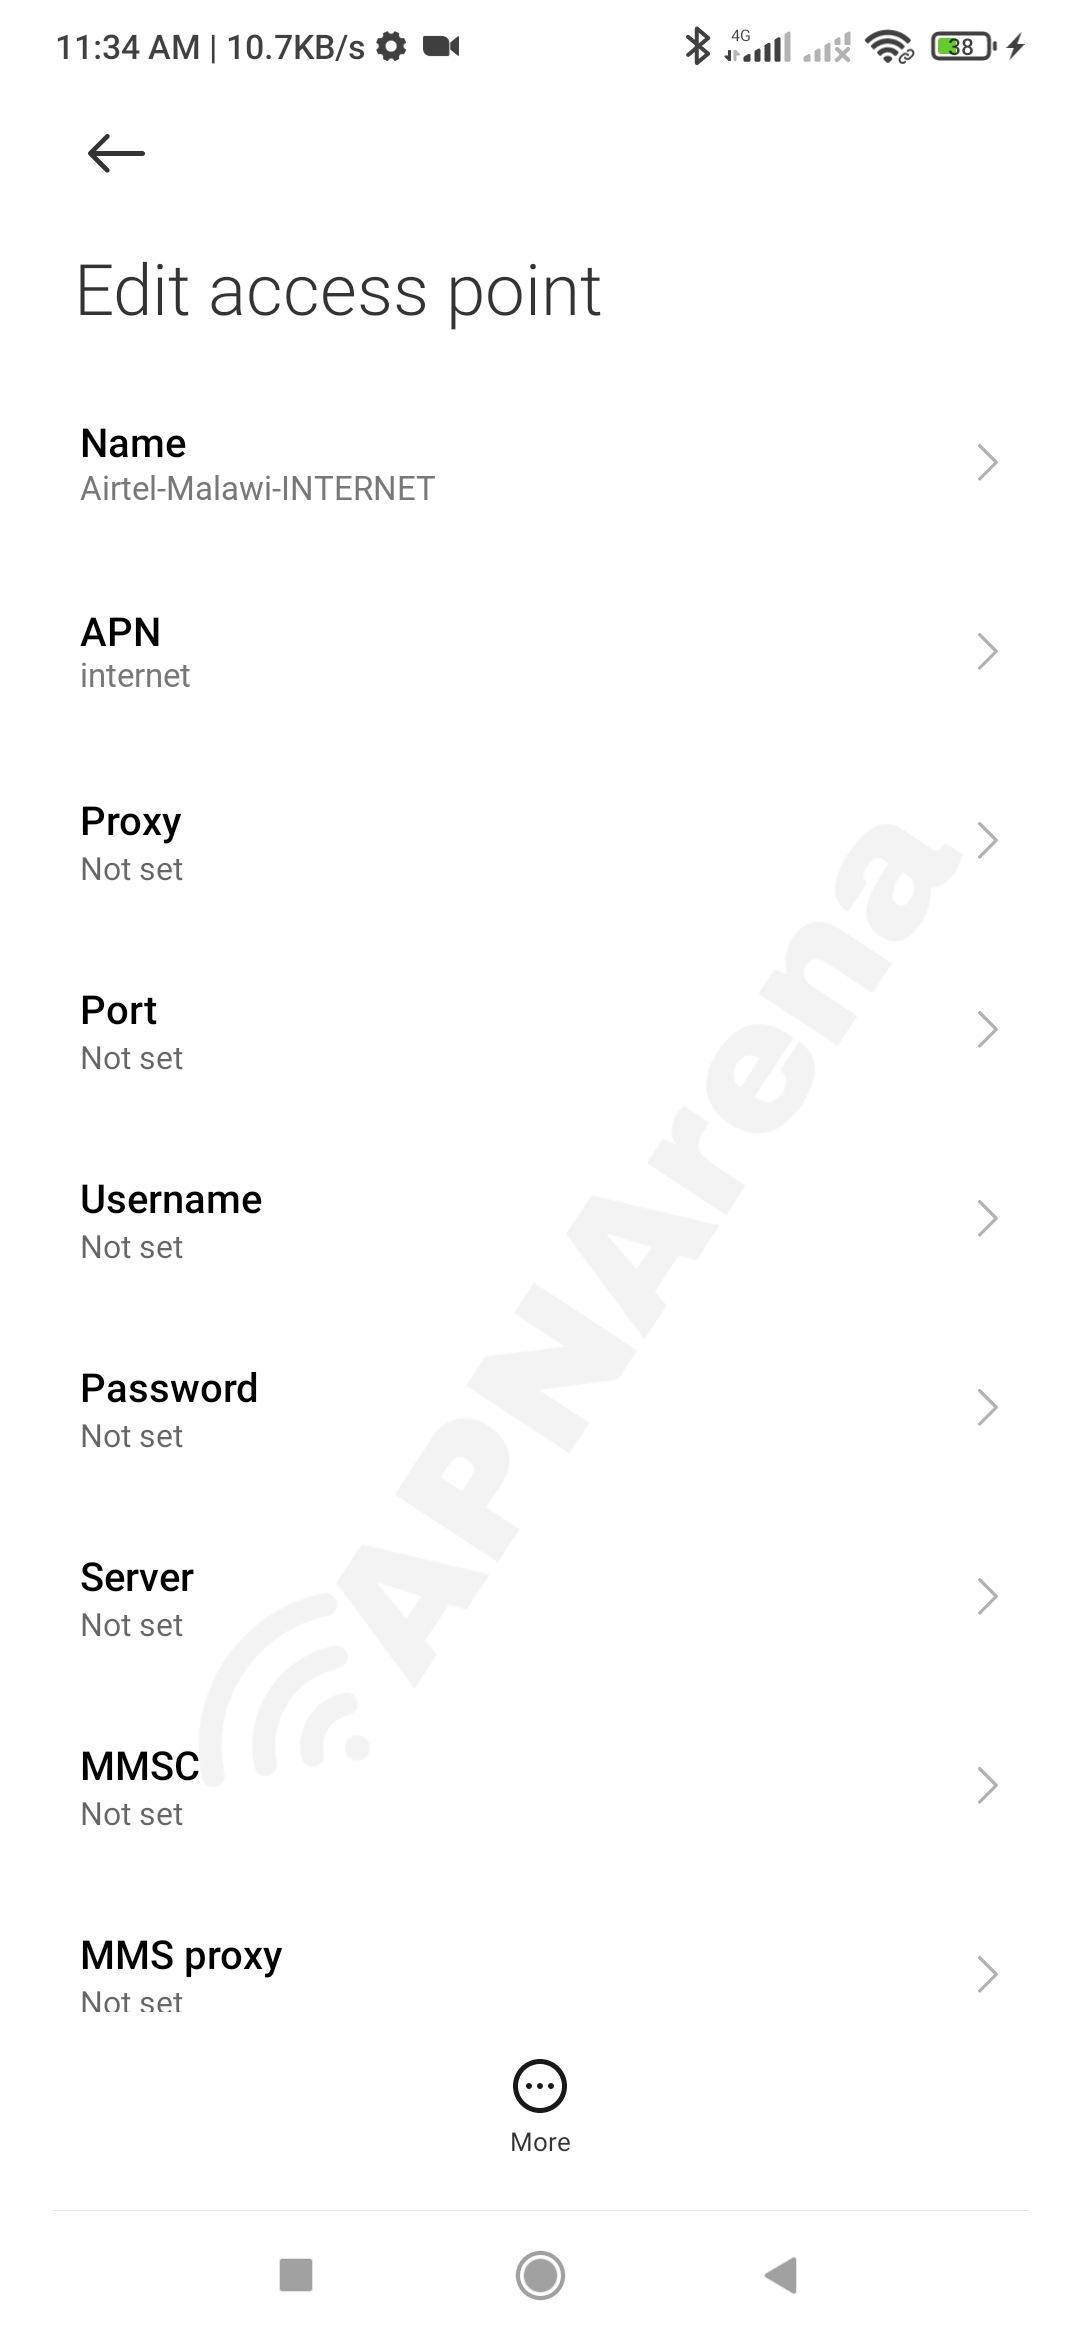 Airtel Malawi (Zain) APN Settings for Android